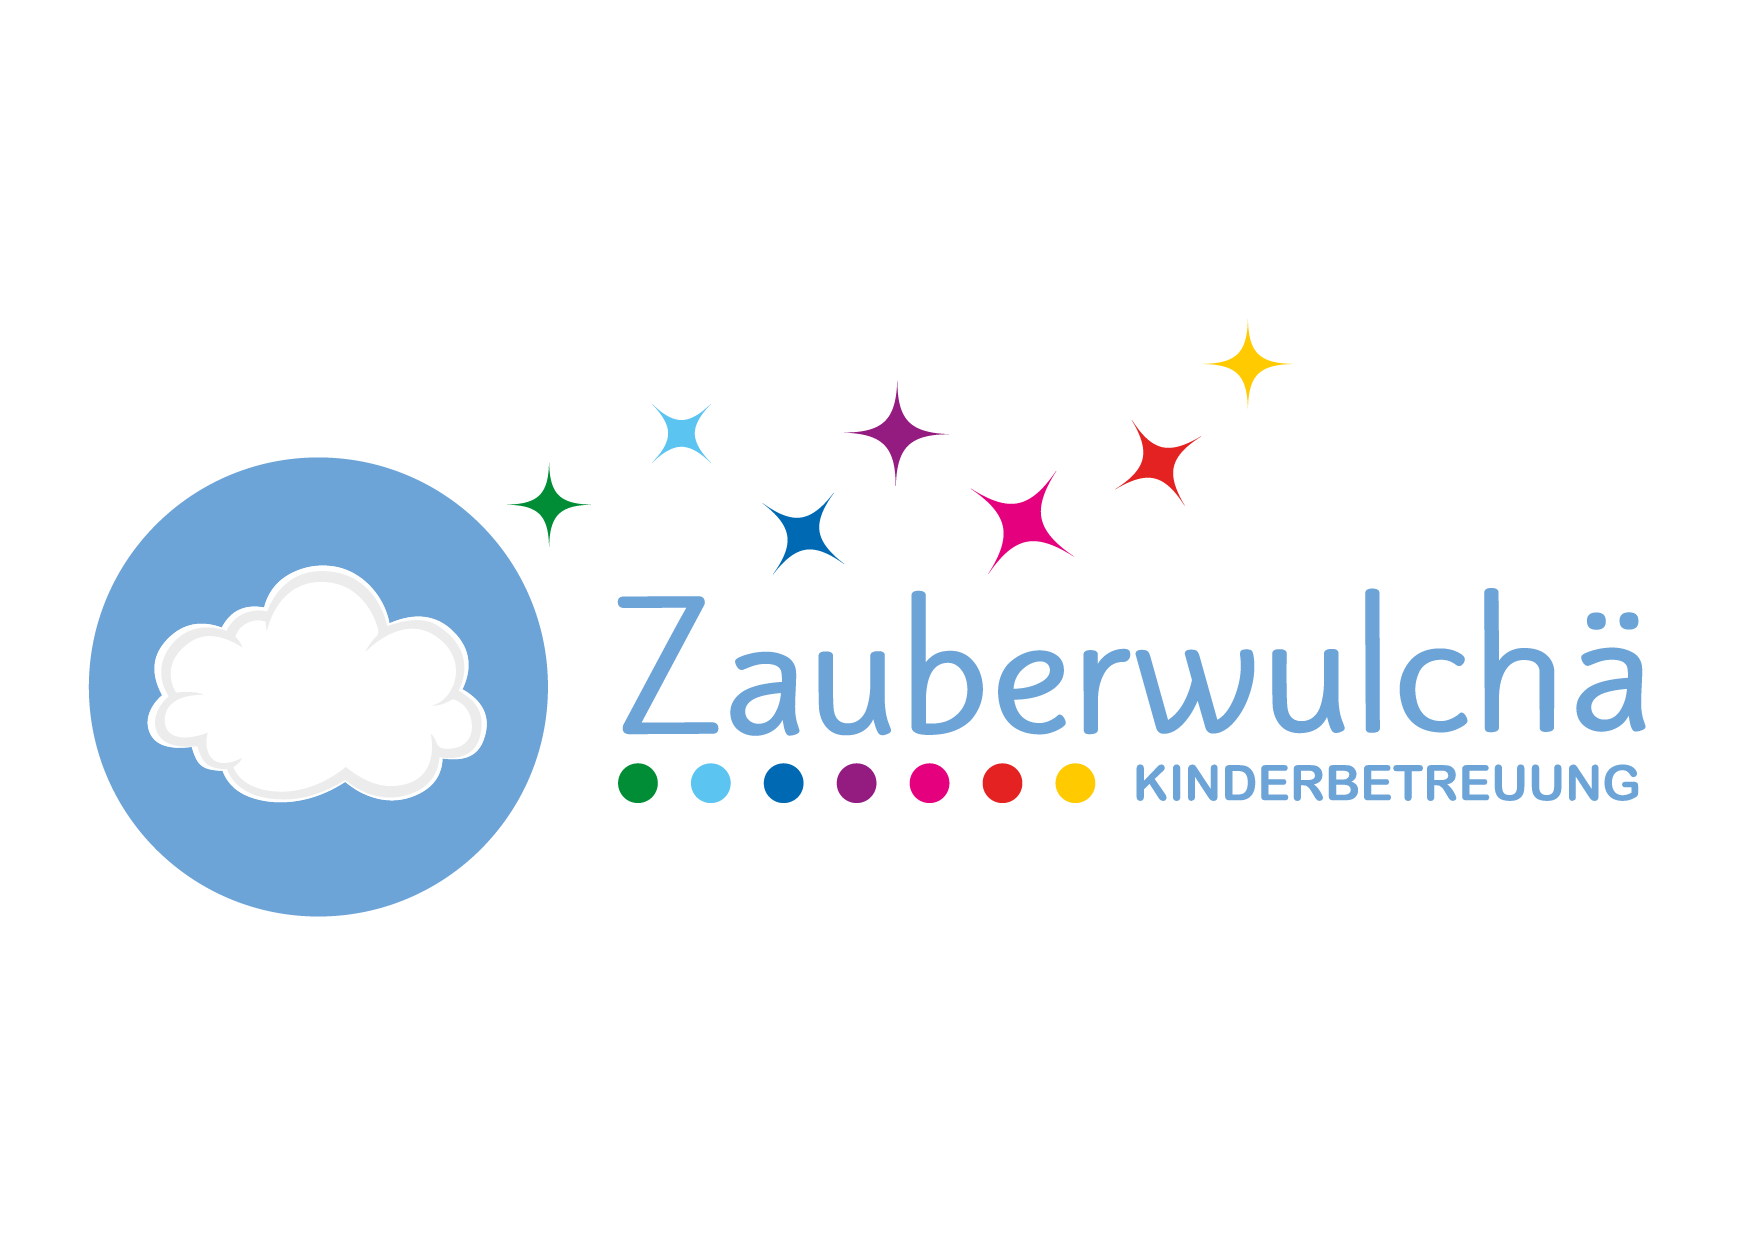 Zauberwulchae Kinderbetreuung Logo Design